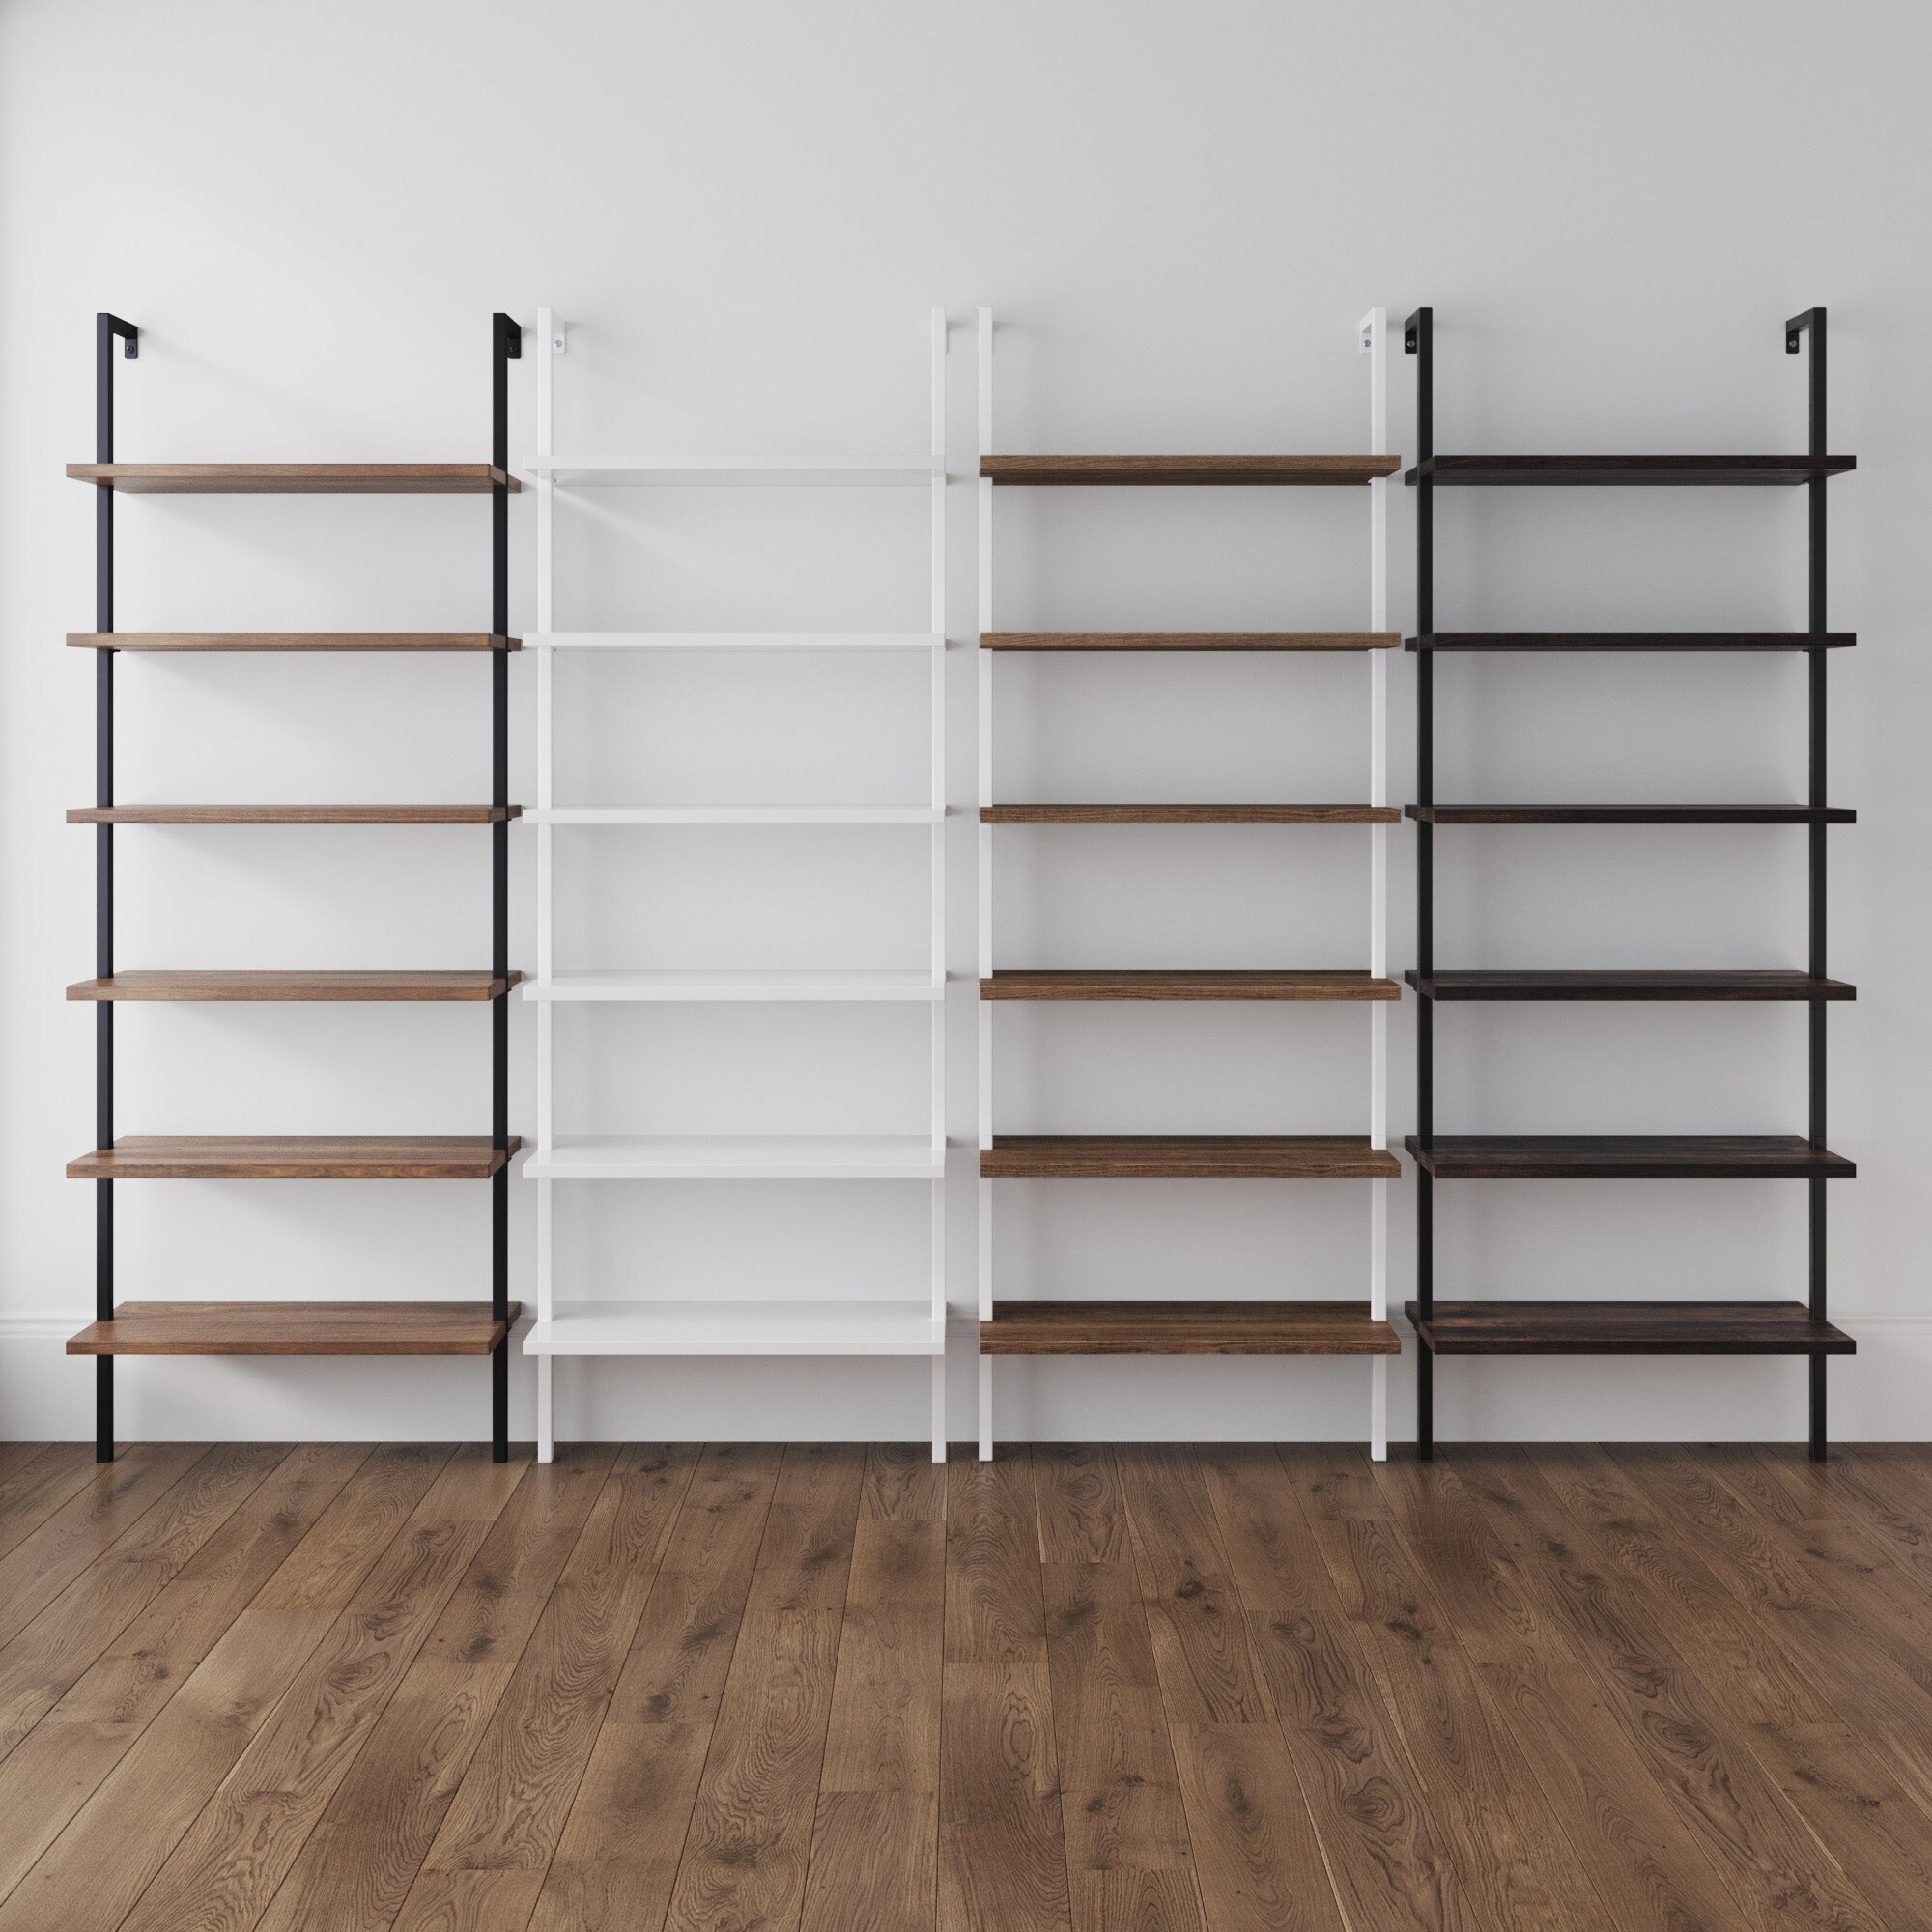 Nathan James Theo 6-Shelf Tall Bookcase Wall Mount Bookshelf Natural Wood Industrial Metal Frame Reclaimed Oak/Black